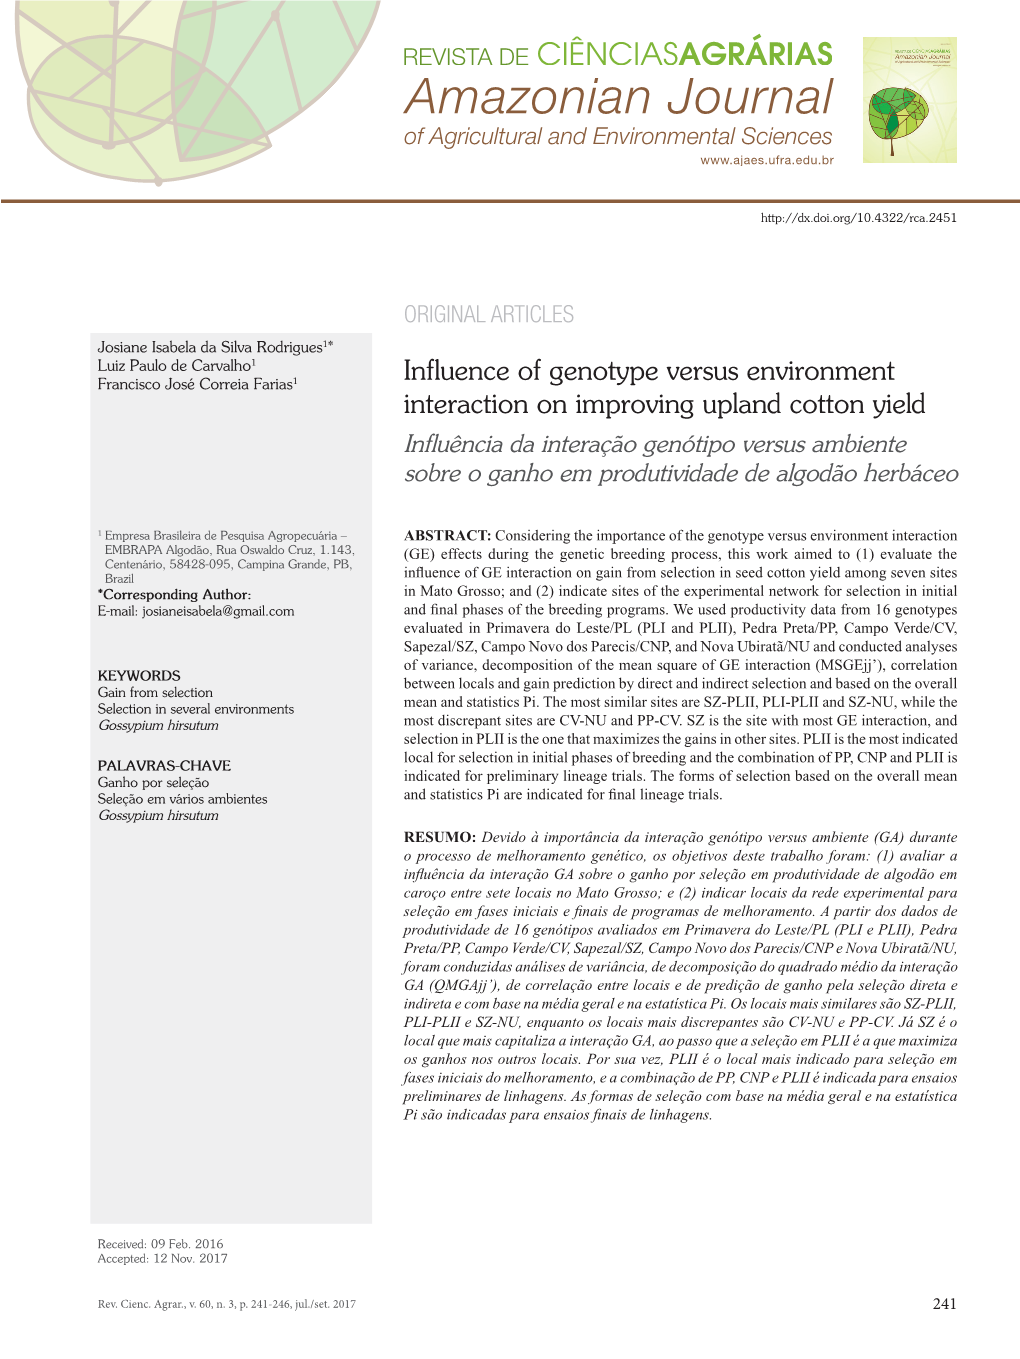 Influence of Genotype Versus Environment Interaction On